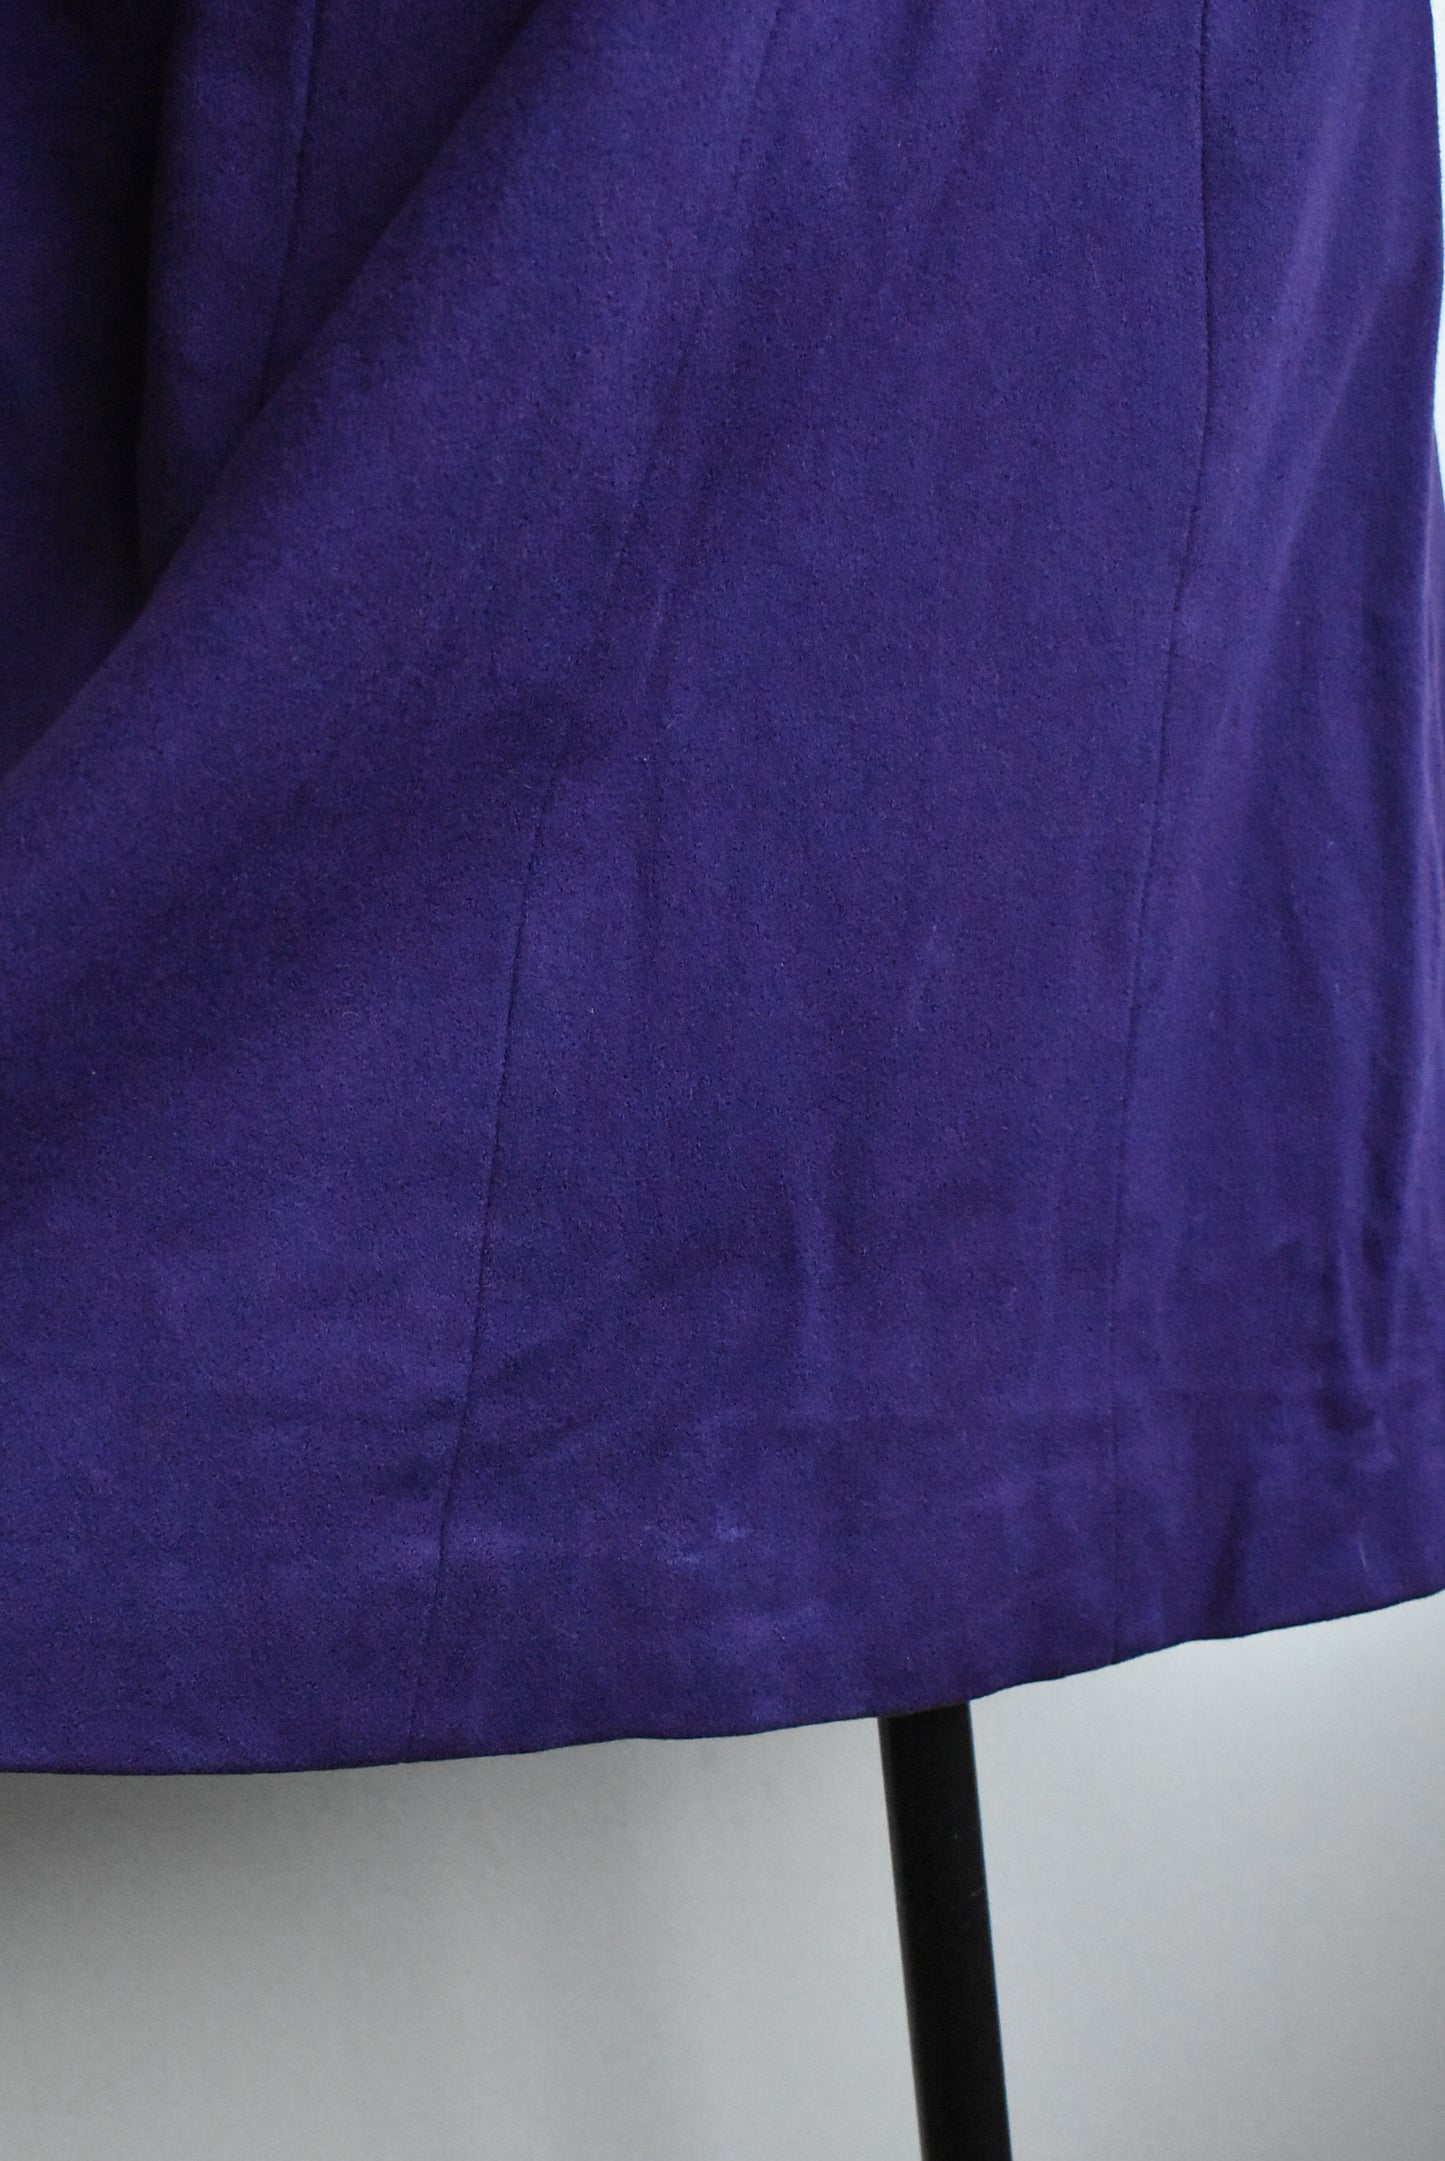 Retro hand-made purple wool dress